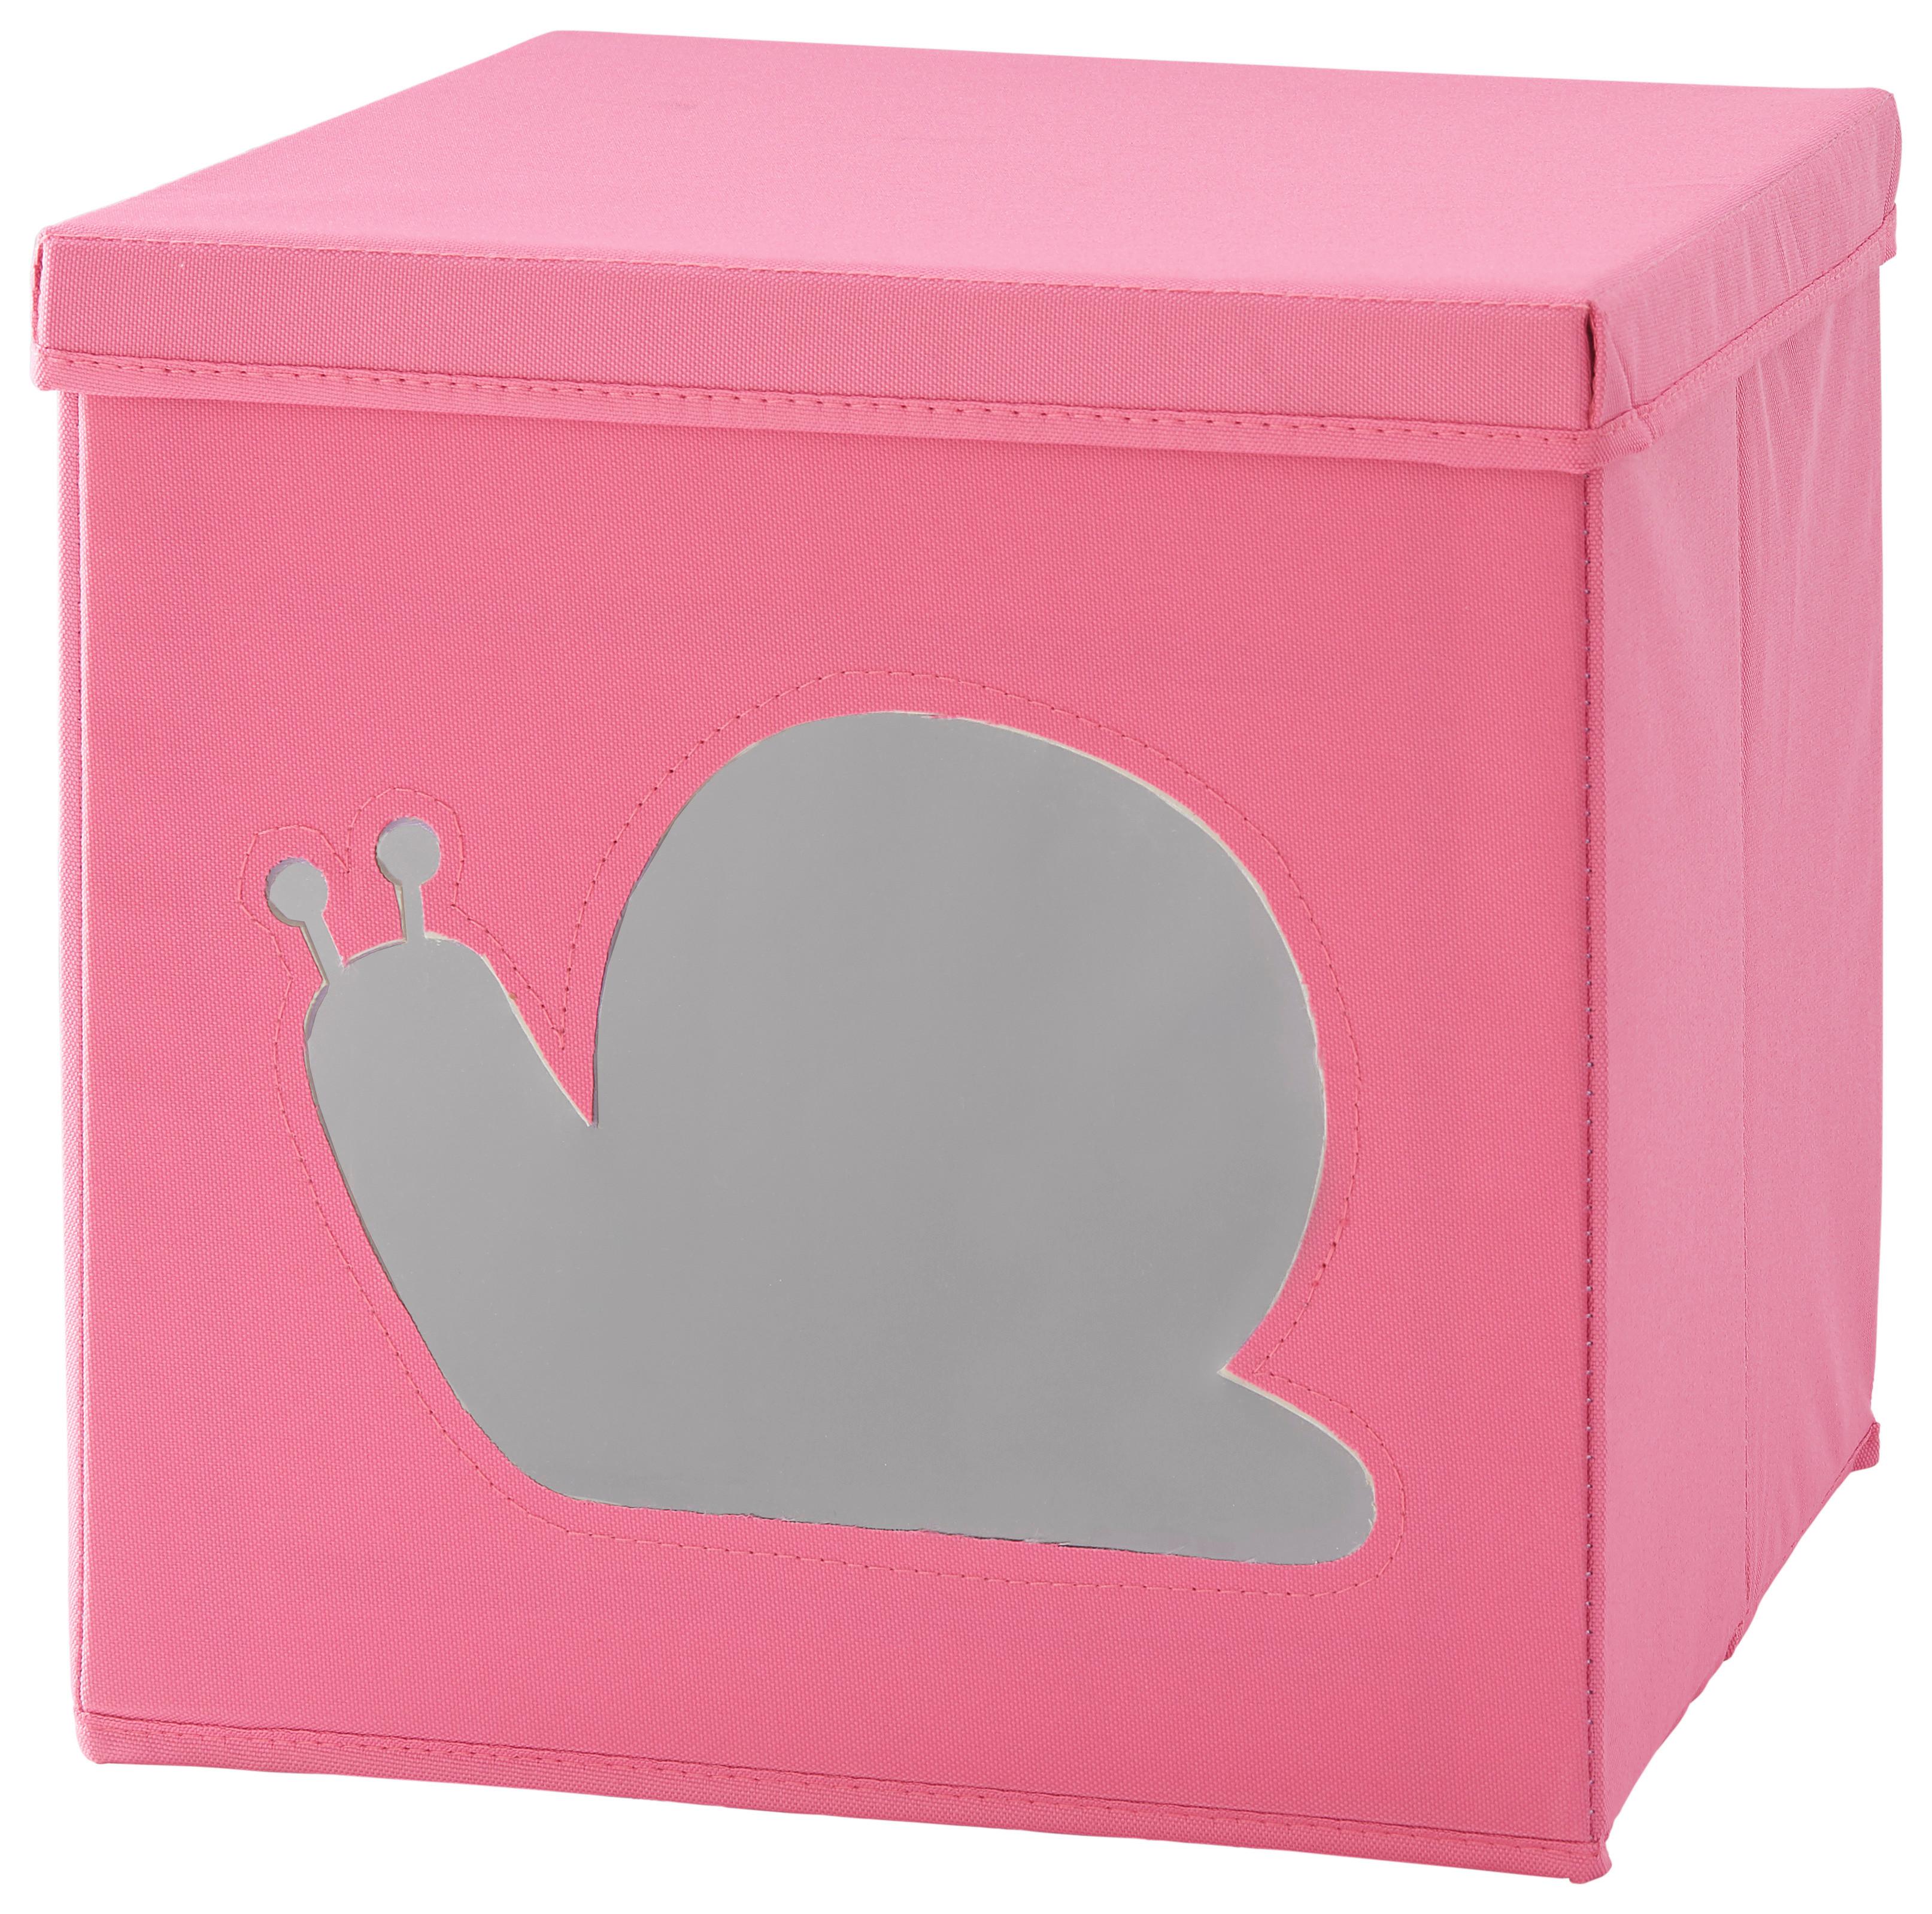 Skládací Krabice Alisa, 33/32/33cm - růžová/fialová, karton/textil (33/32/33cm) - Modern Living